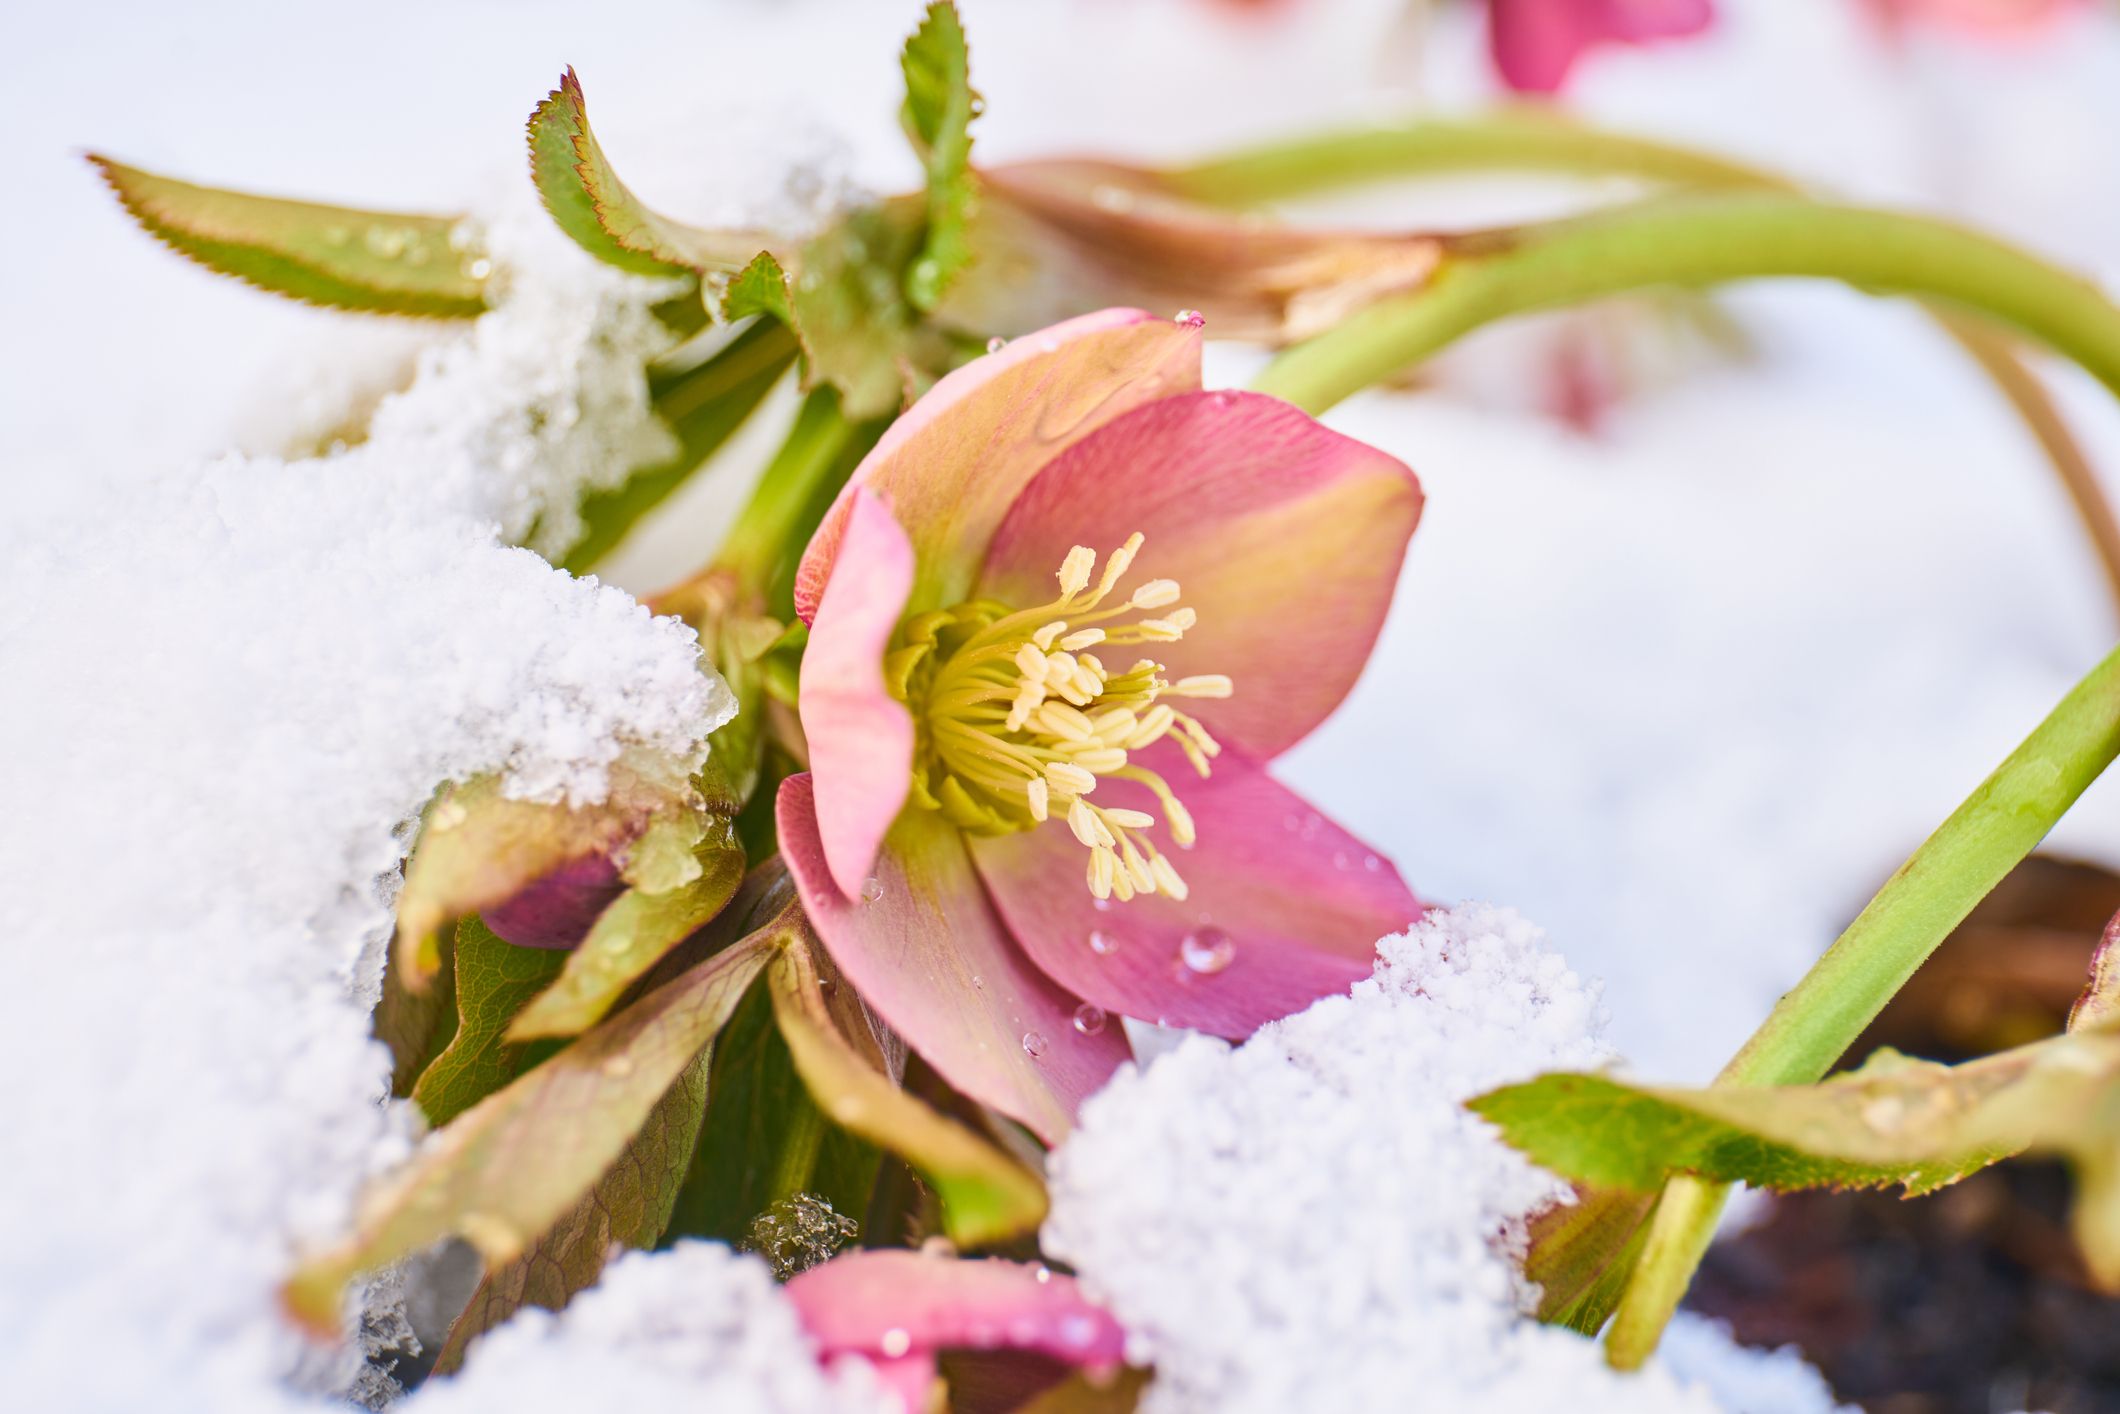 Stunning Winter-Flowering Plants to Brighten Up the Colder Months